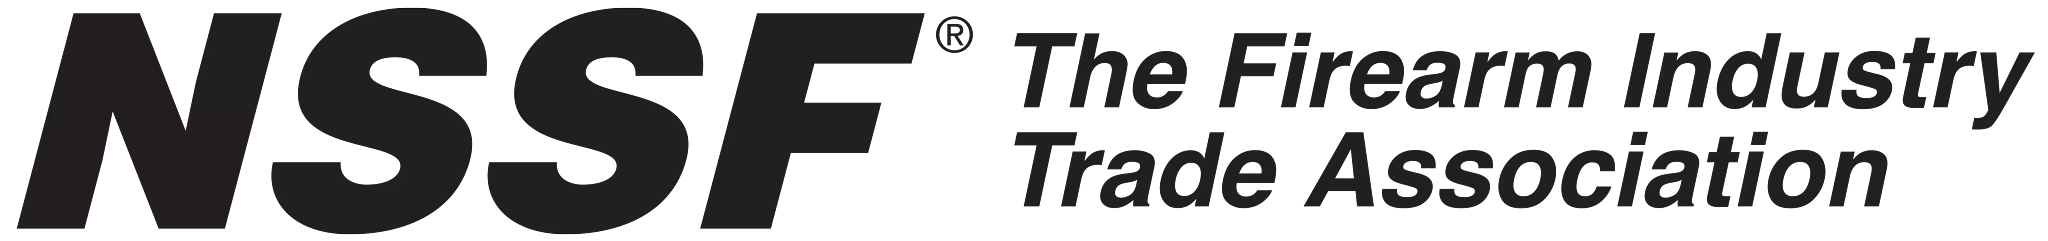 the firearm industry trade association logo